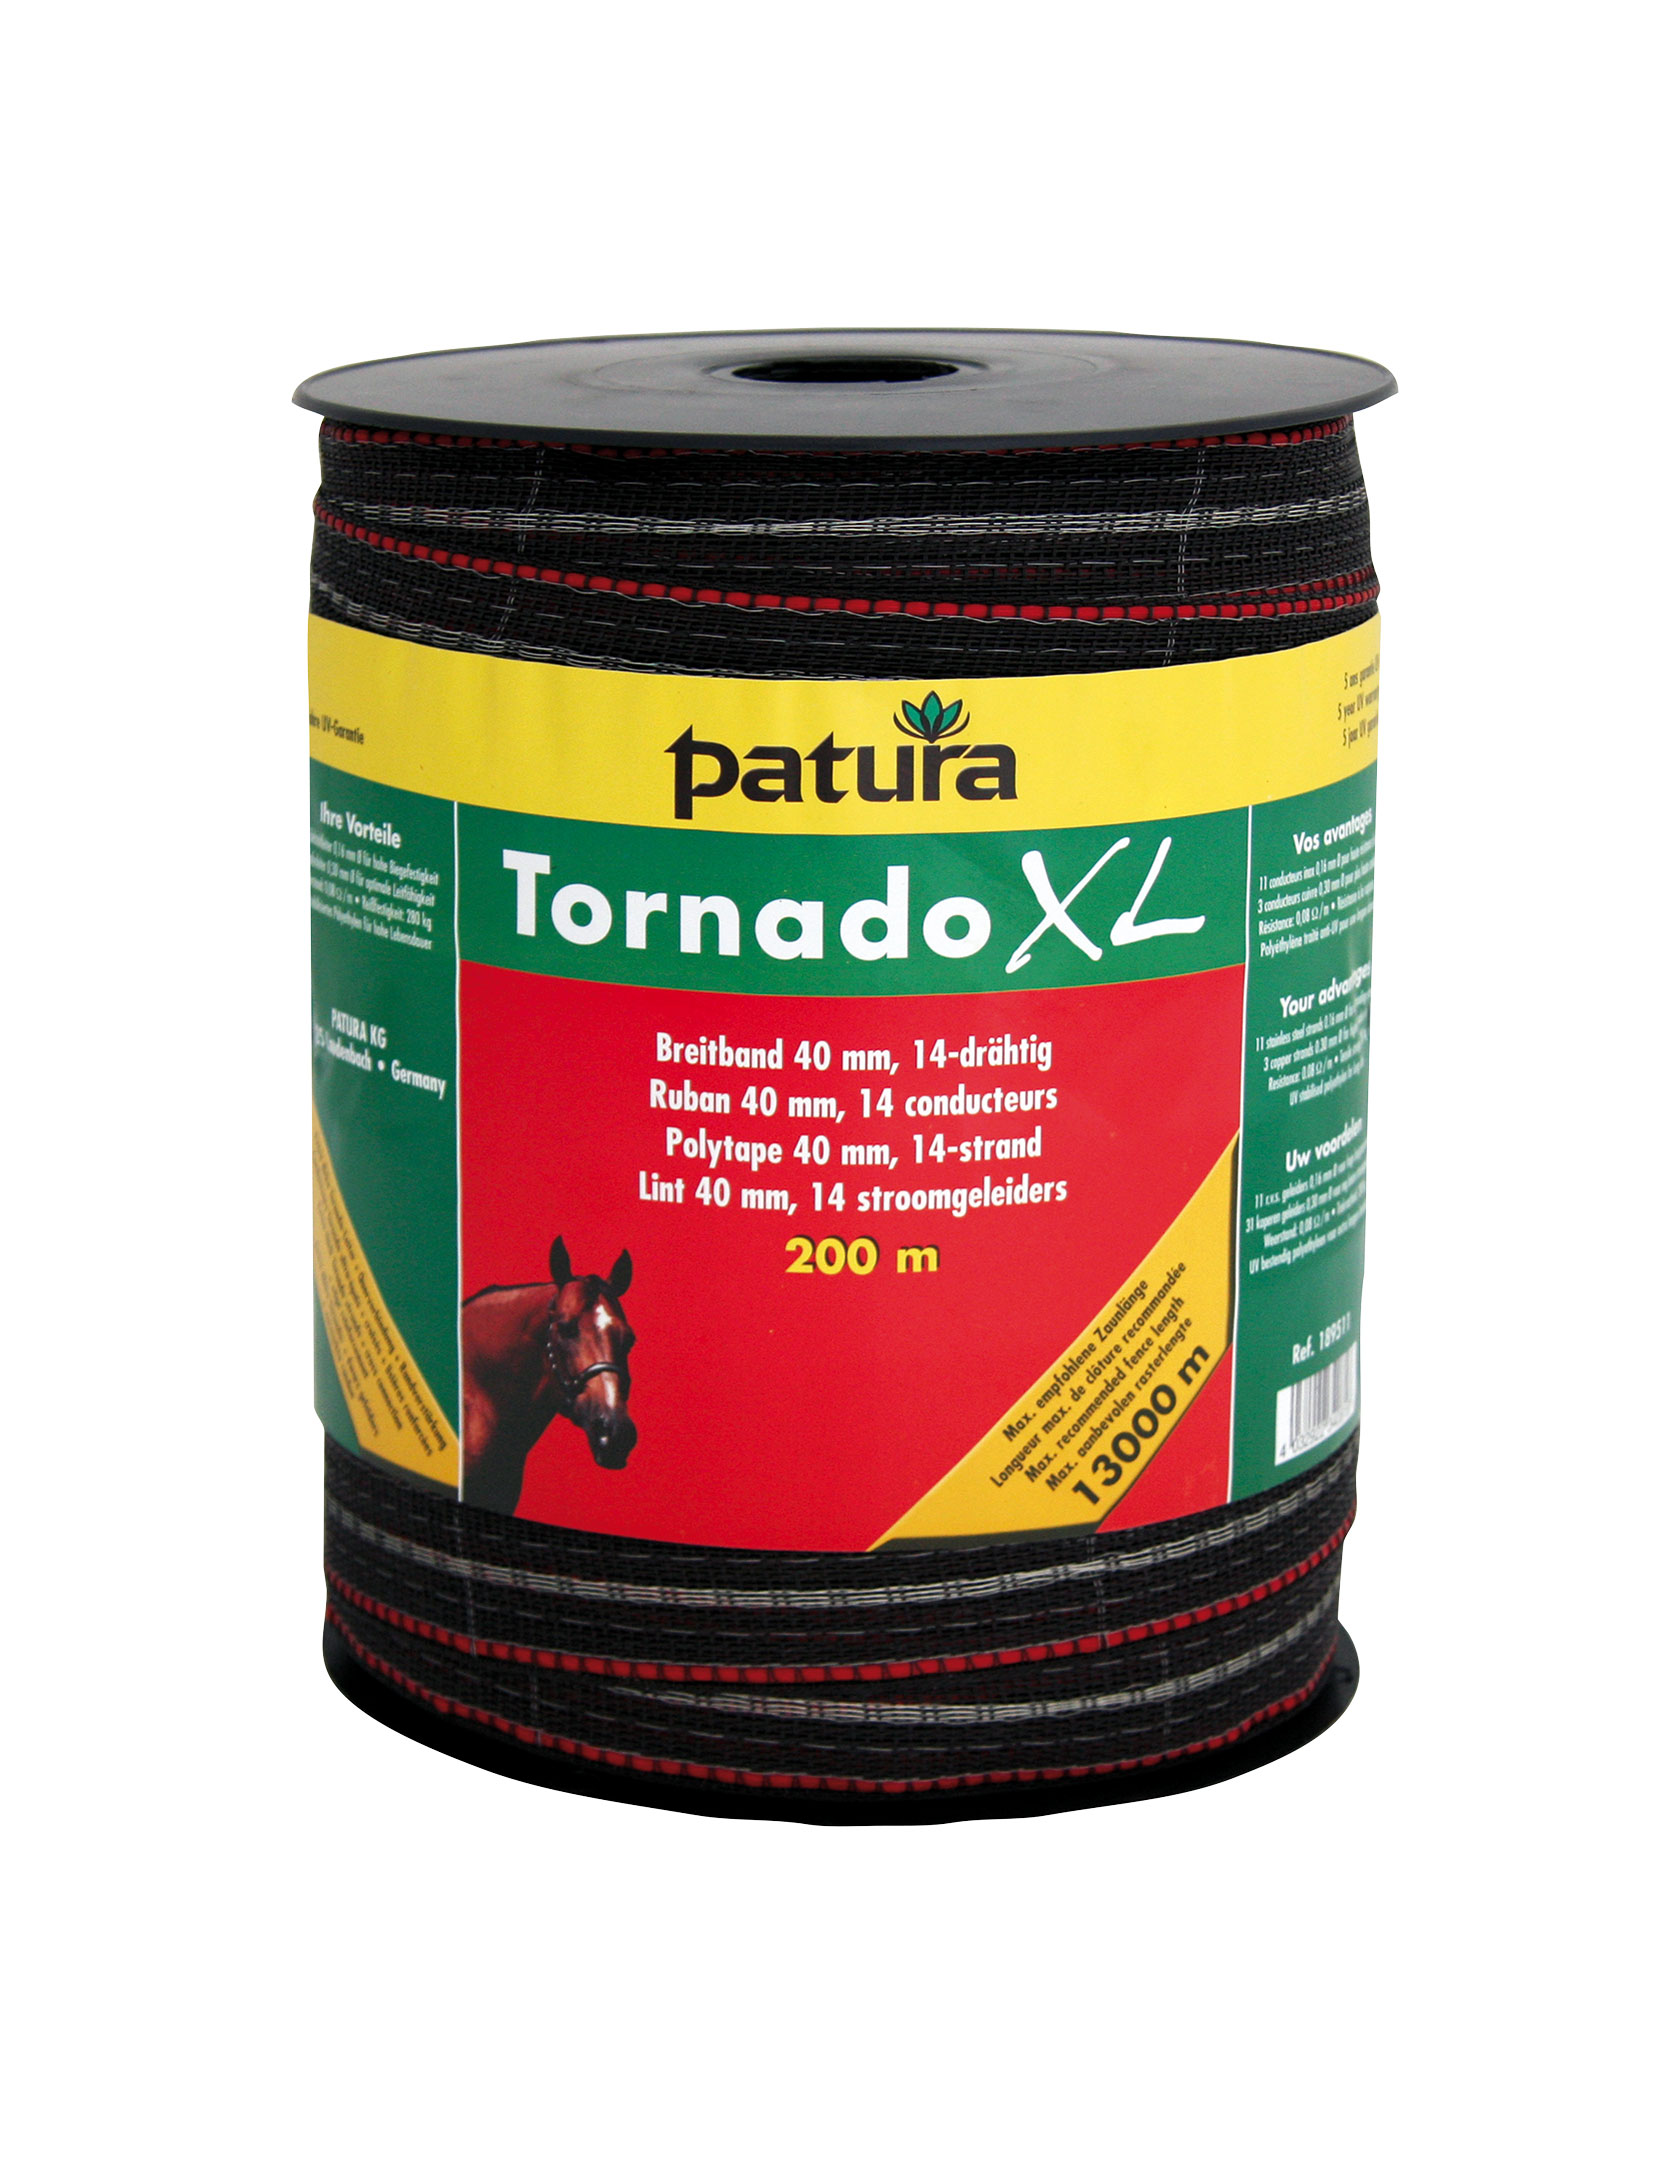 PATURA Tornado XL Breitband 40 mm